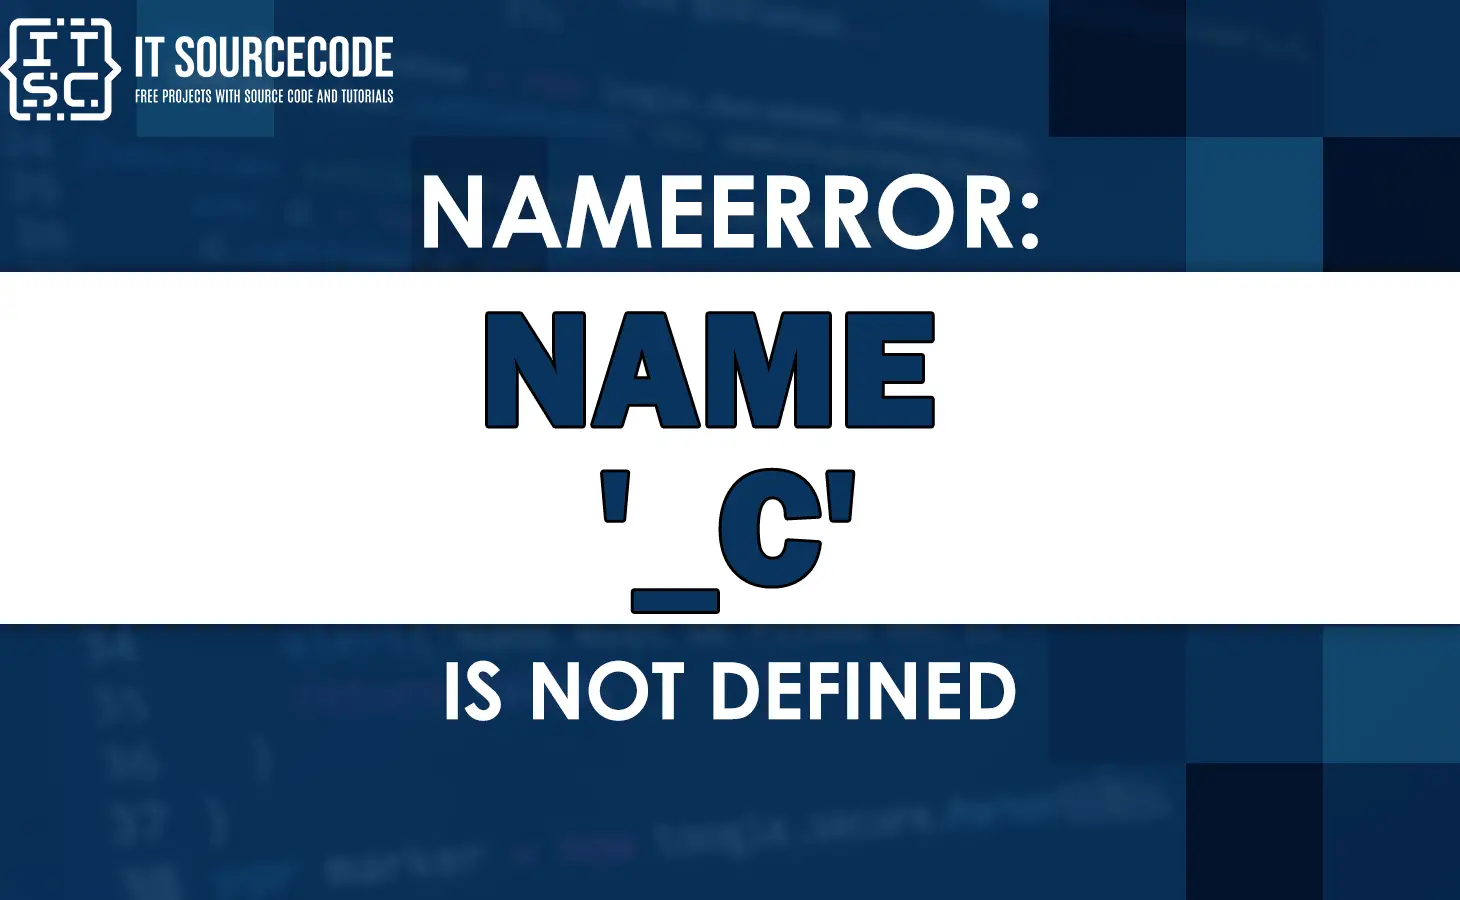 Nameerror: name '_c' is not defined